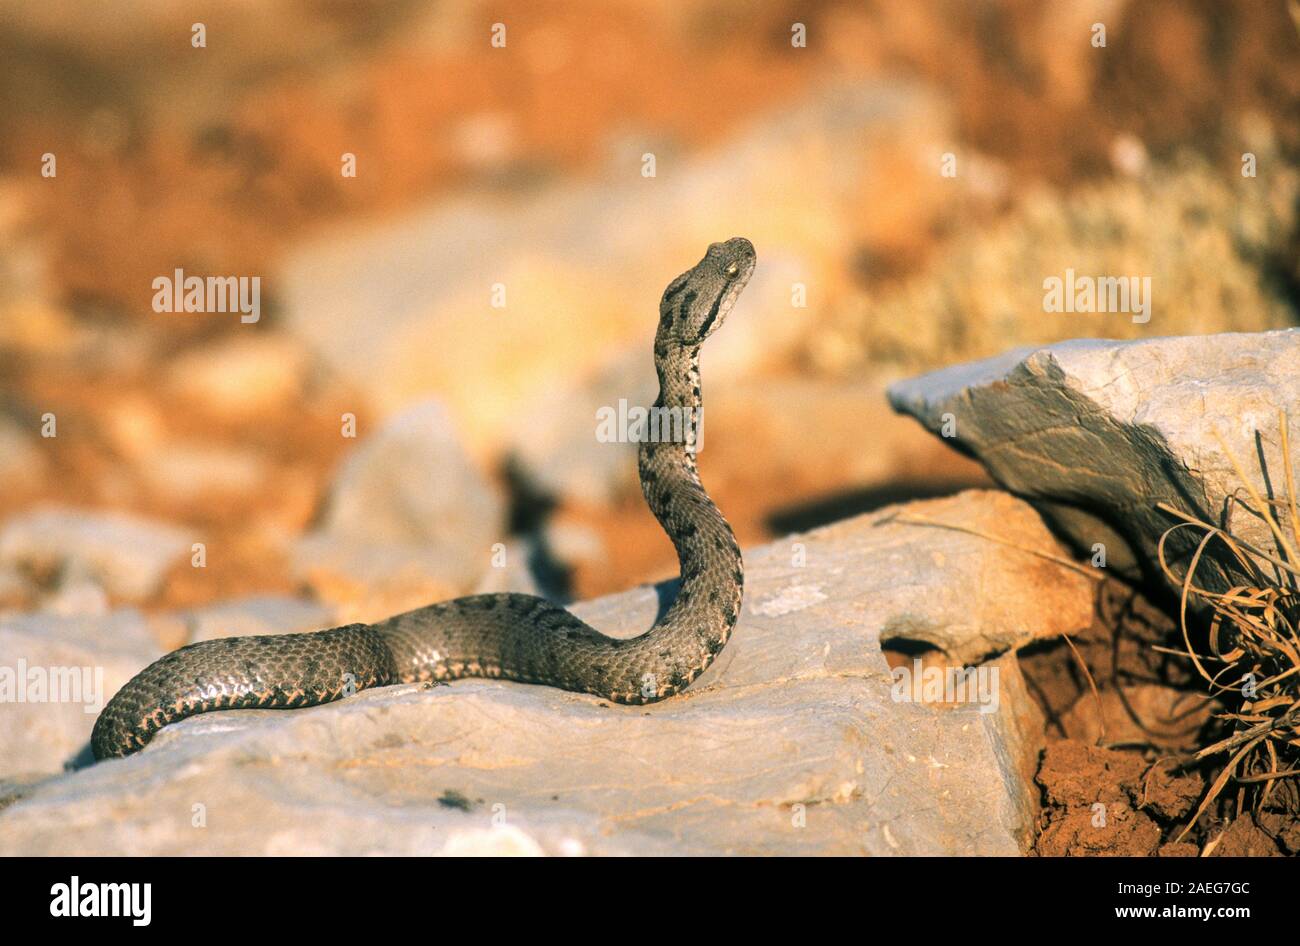 The Lebanon viper (Montivipera bornmuelleri) is a venomous viper species found in Lebanon, Jordan, Israel, and Syria. . Photographed in Israel Stock Photo